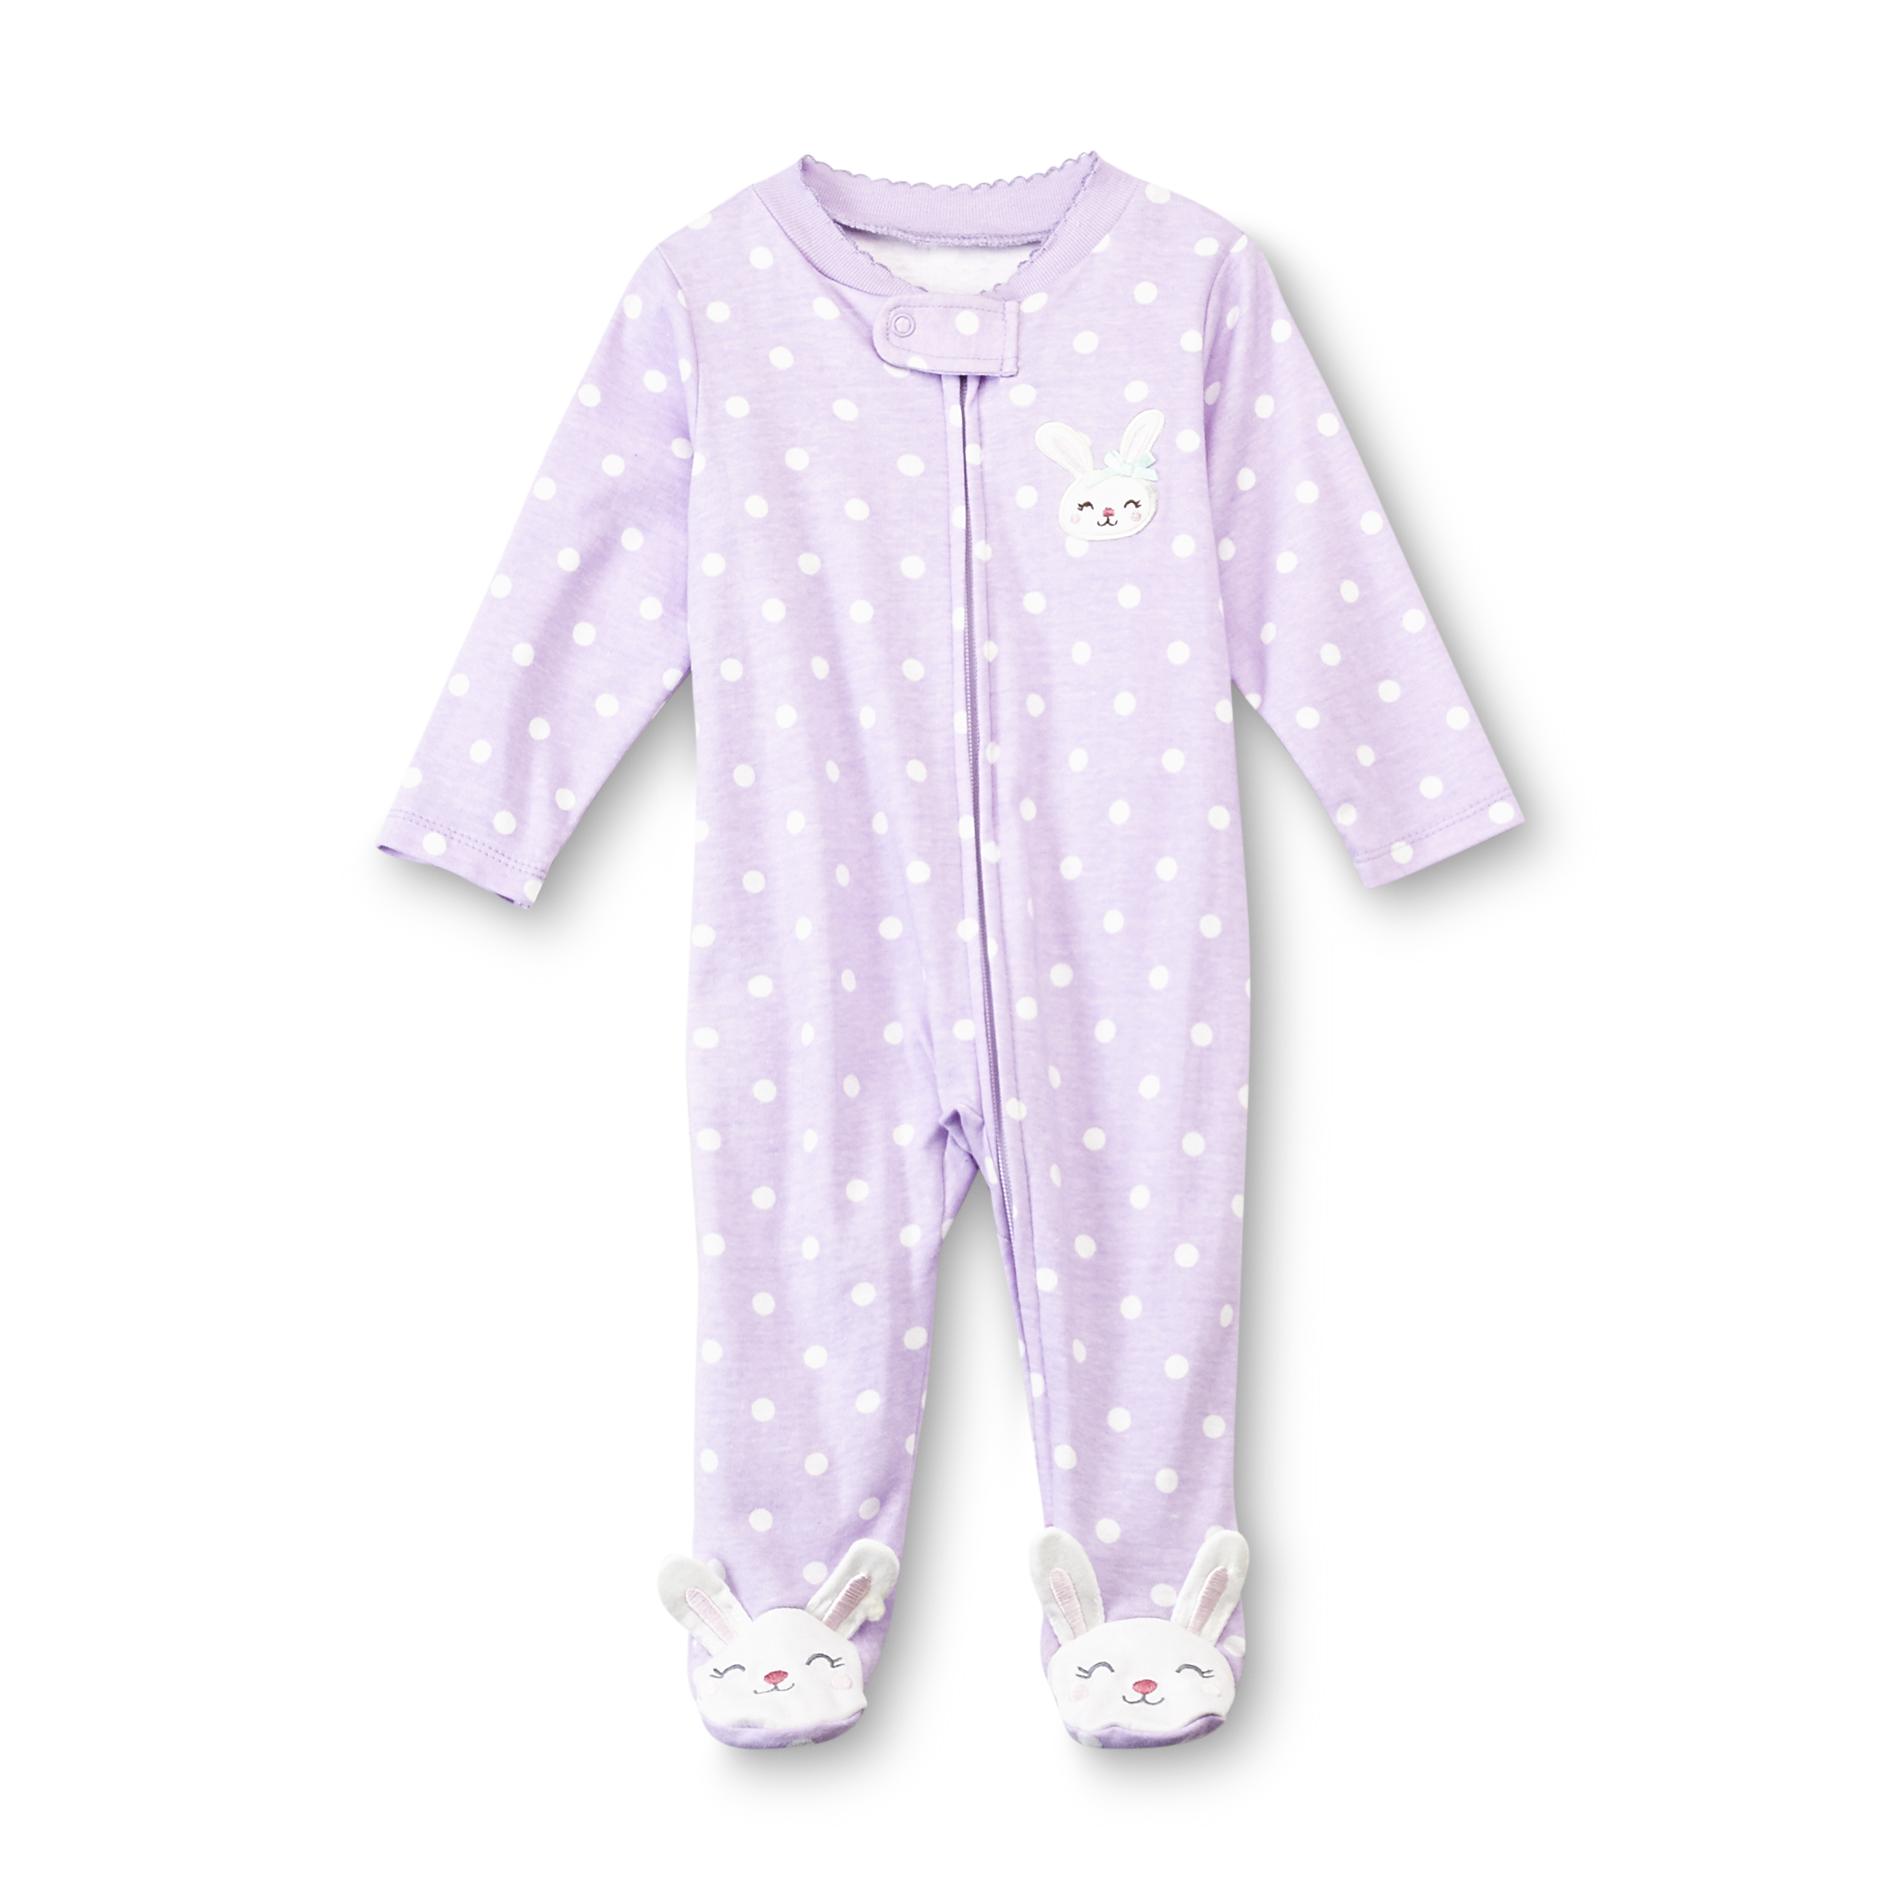 Small Wonders Newborn Girl's Footed Sleeper Pajamas - Bunny